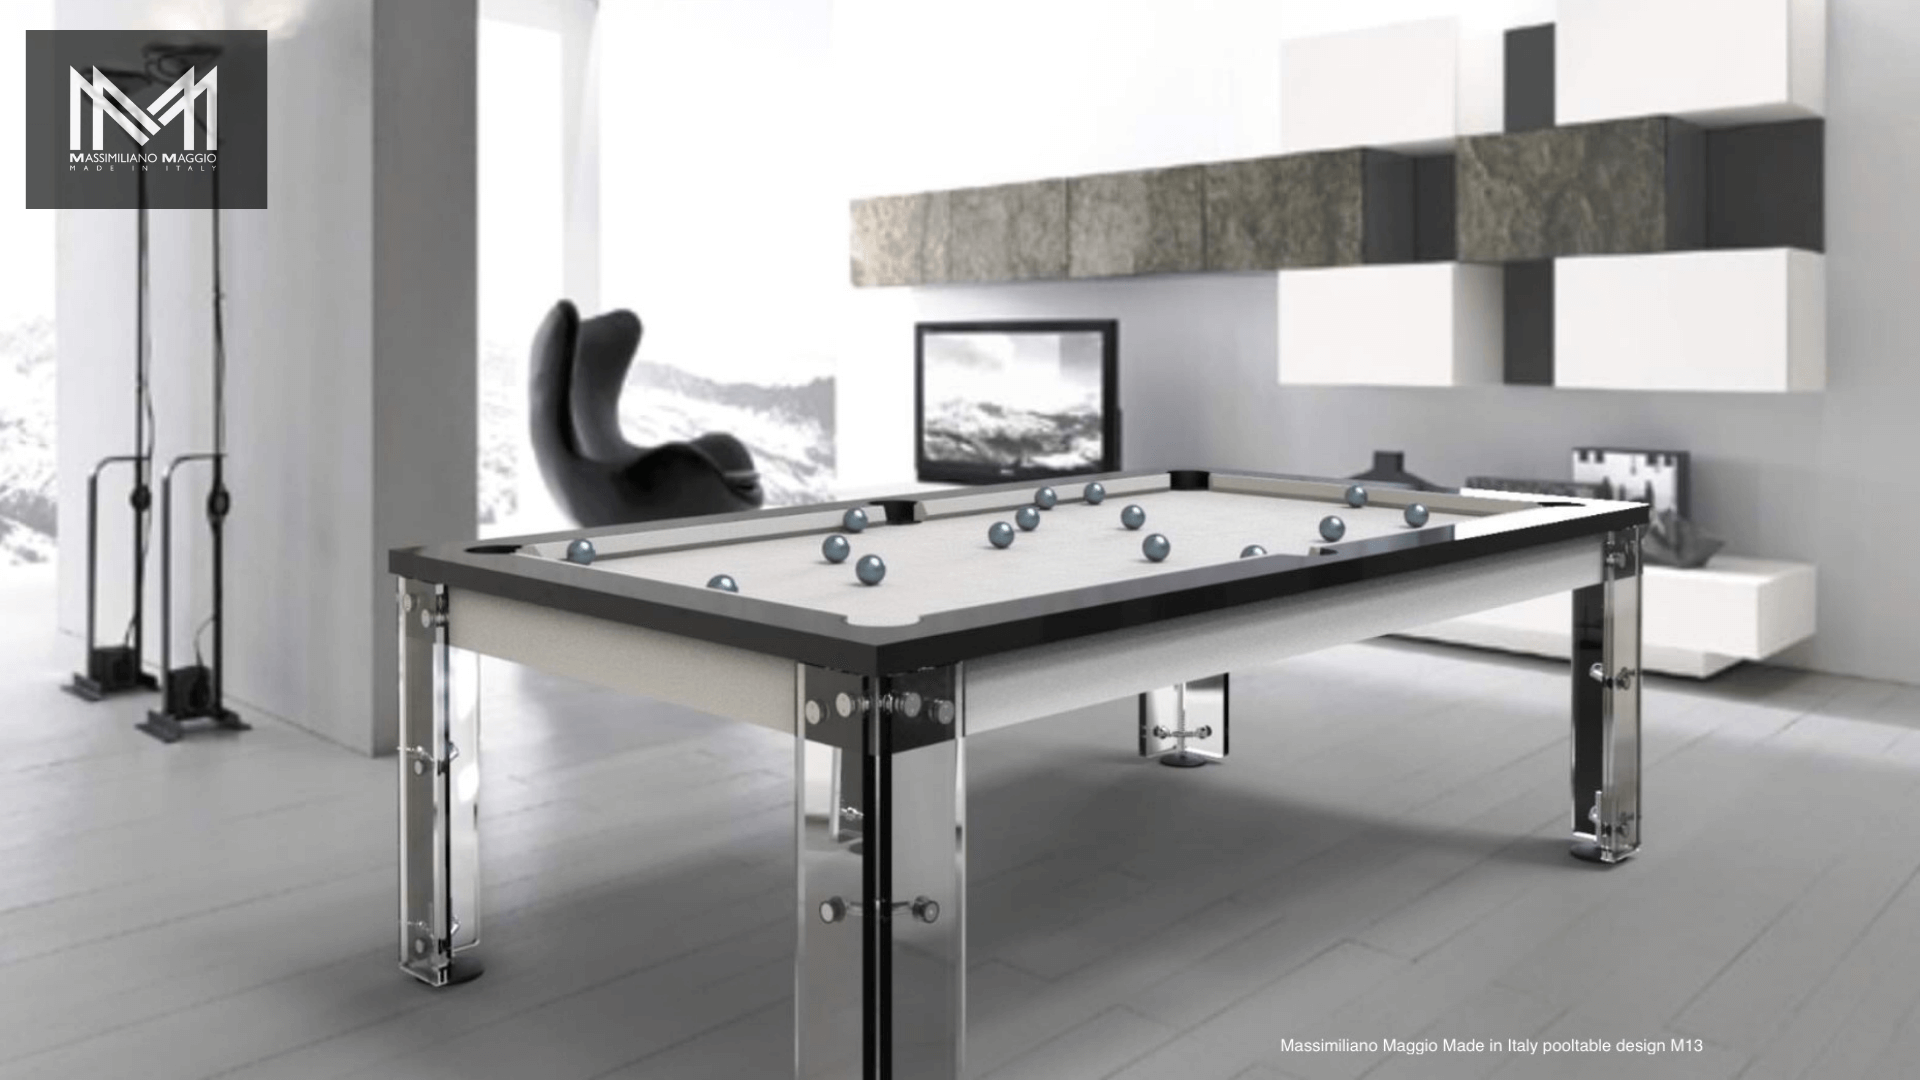 3 Biliardo M13 Massimiliano Maggio Made in italy Luxury Pool Table design Ziggurat 1